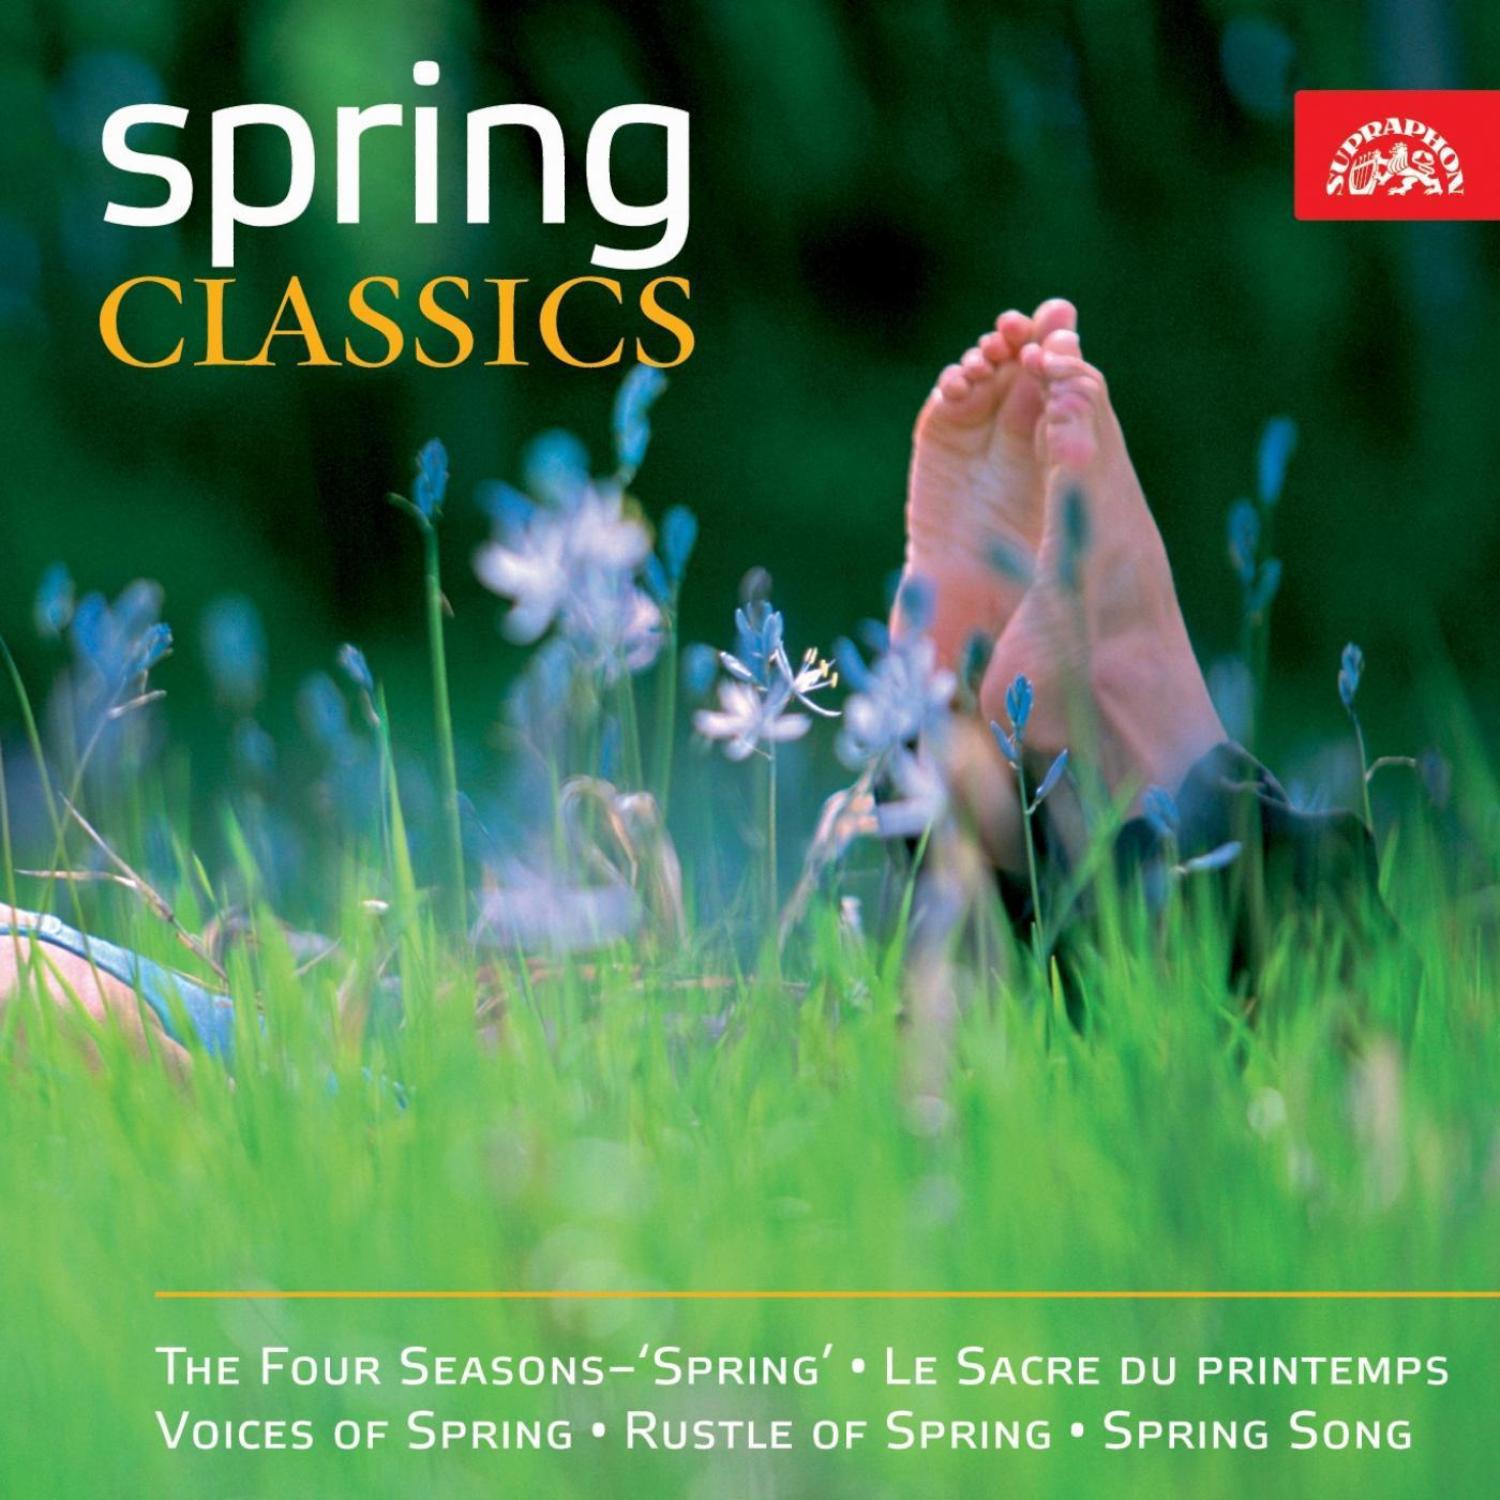 Sonata for Violin and Piano No. 5 in F major, Spring, Op. 24: I. Allegro